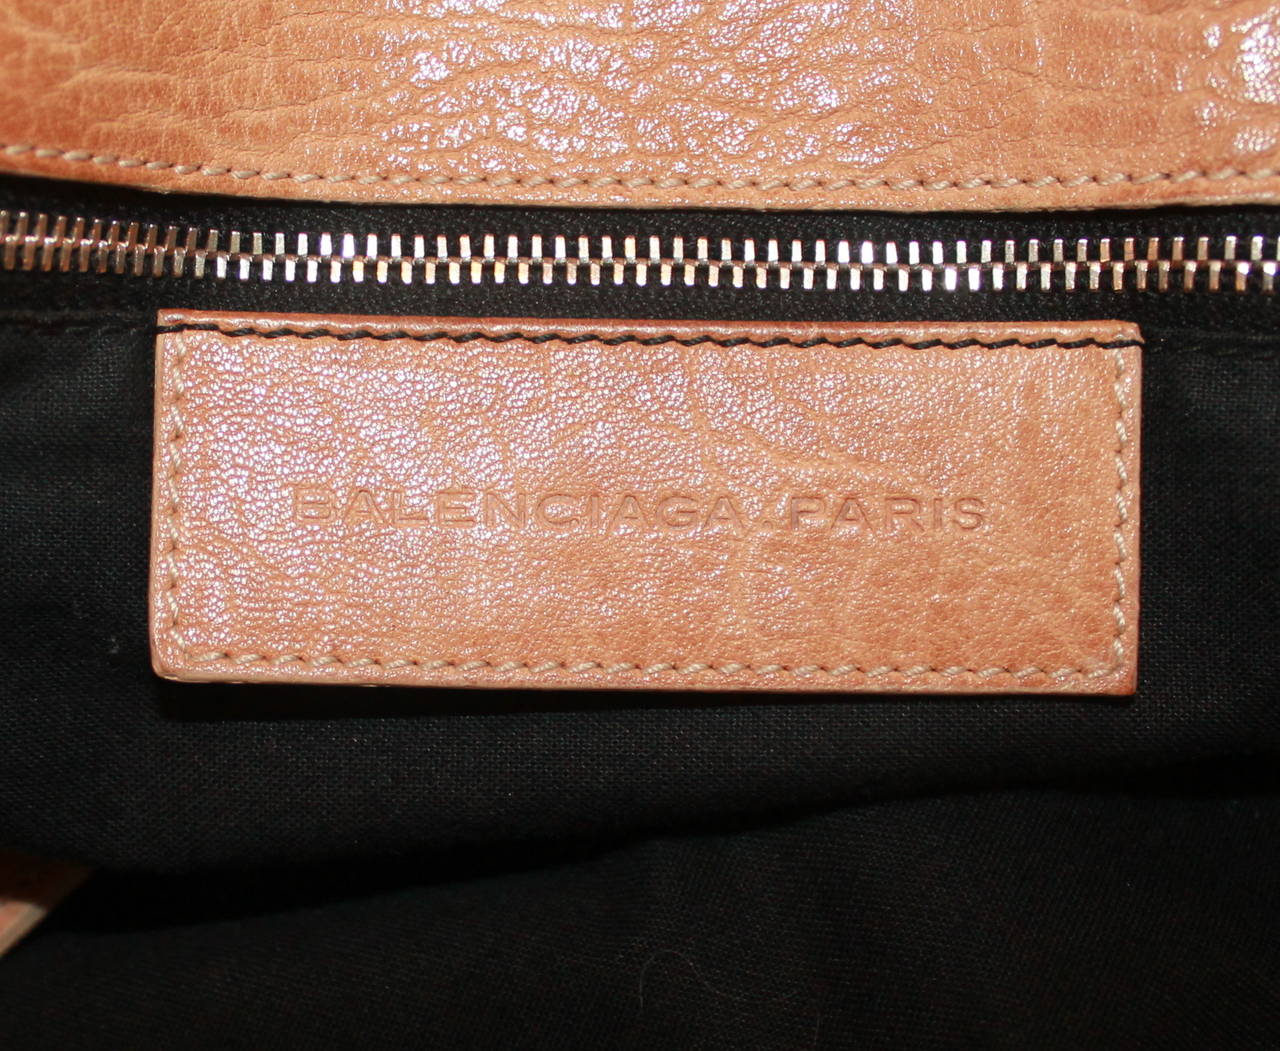 Balenciaga Luggage Leather Tote Handbag 1